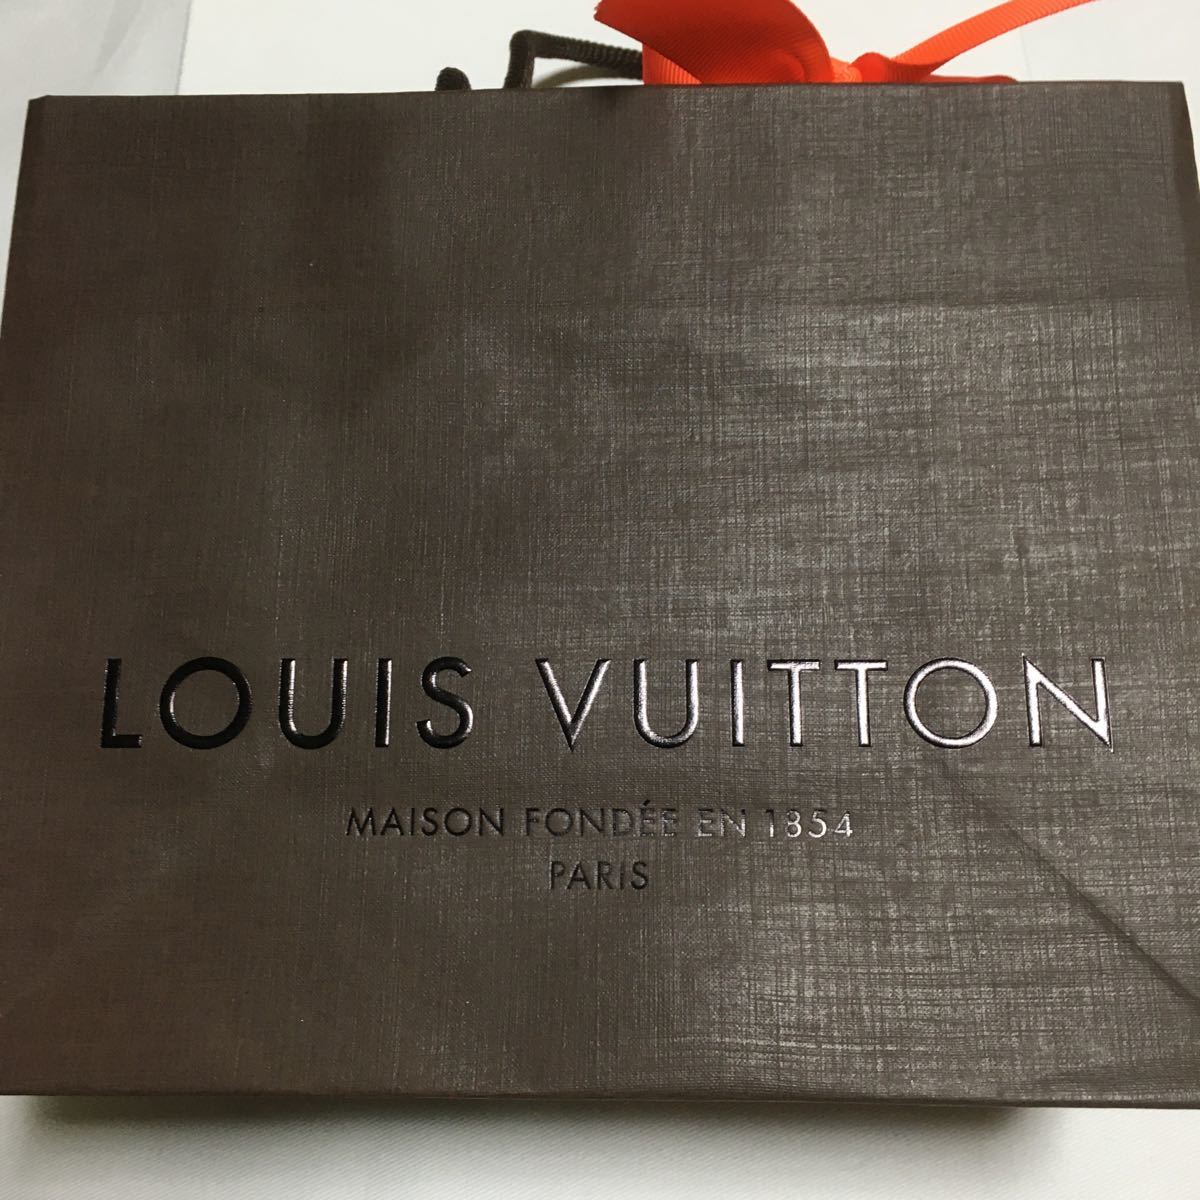 LOUIS VUITTON ショップ袋 プレゼント用セット メッセージカード付き